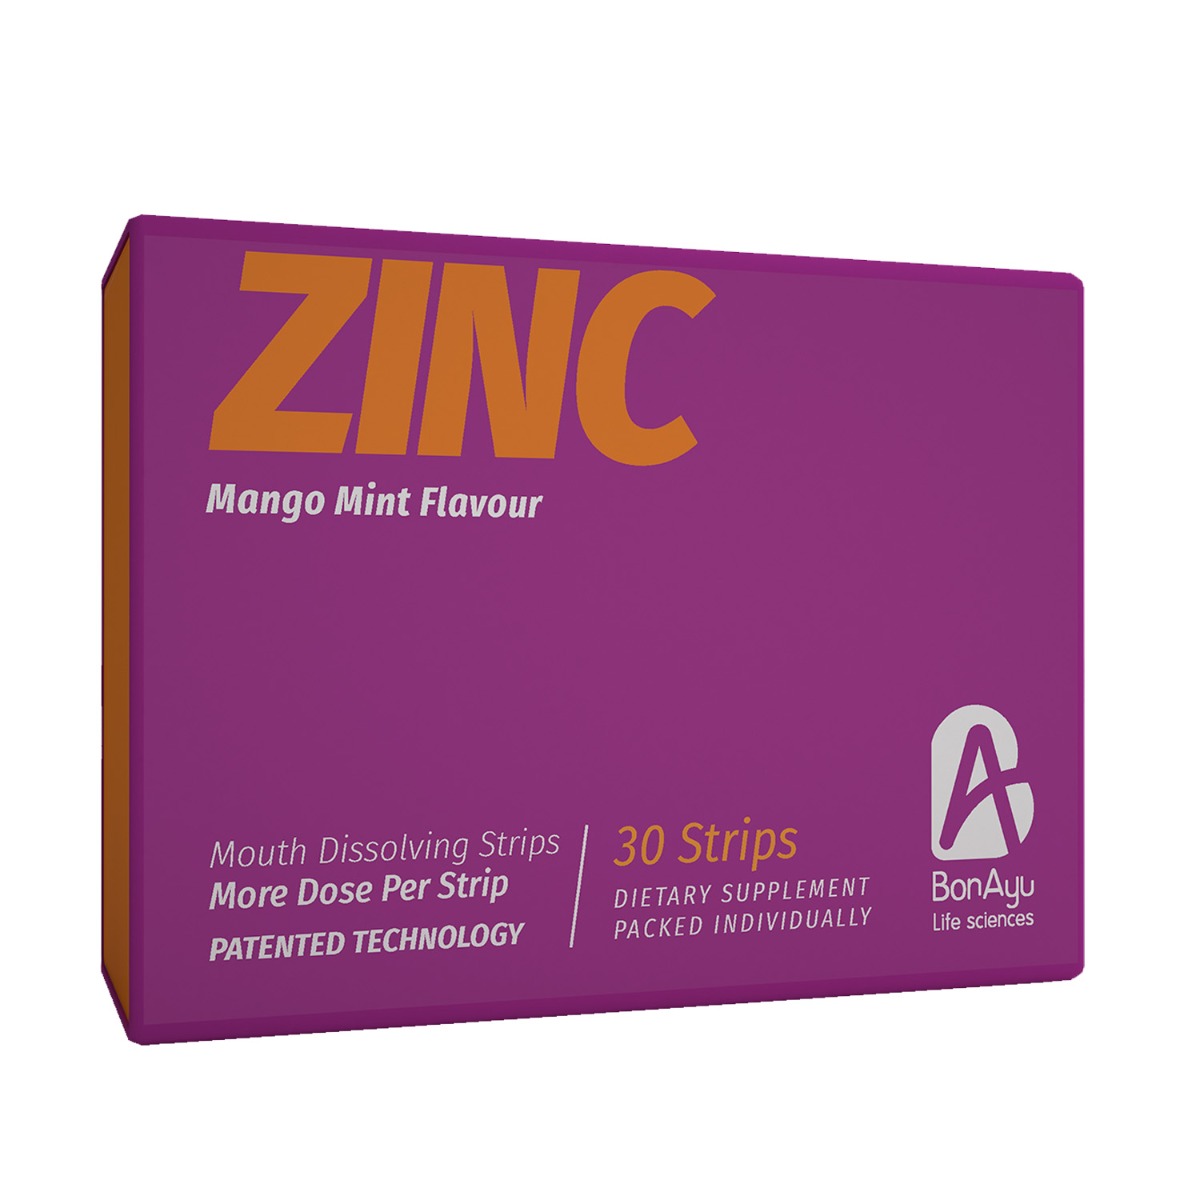 BonAyu Zinc Mango Mint Flavour Mouth Dissolving Strips Dietary Supplement, 30 Strips